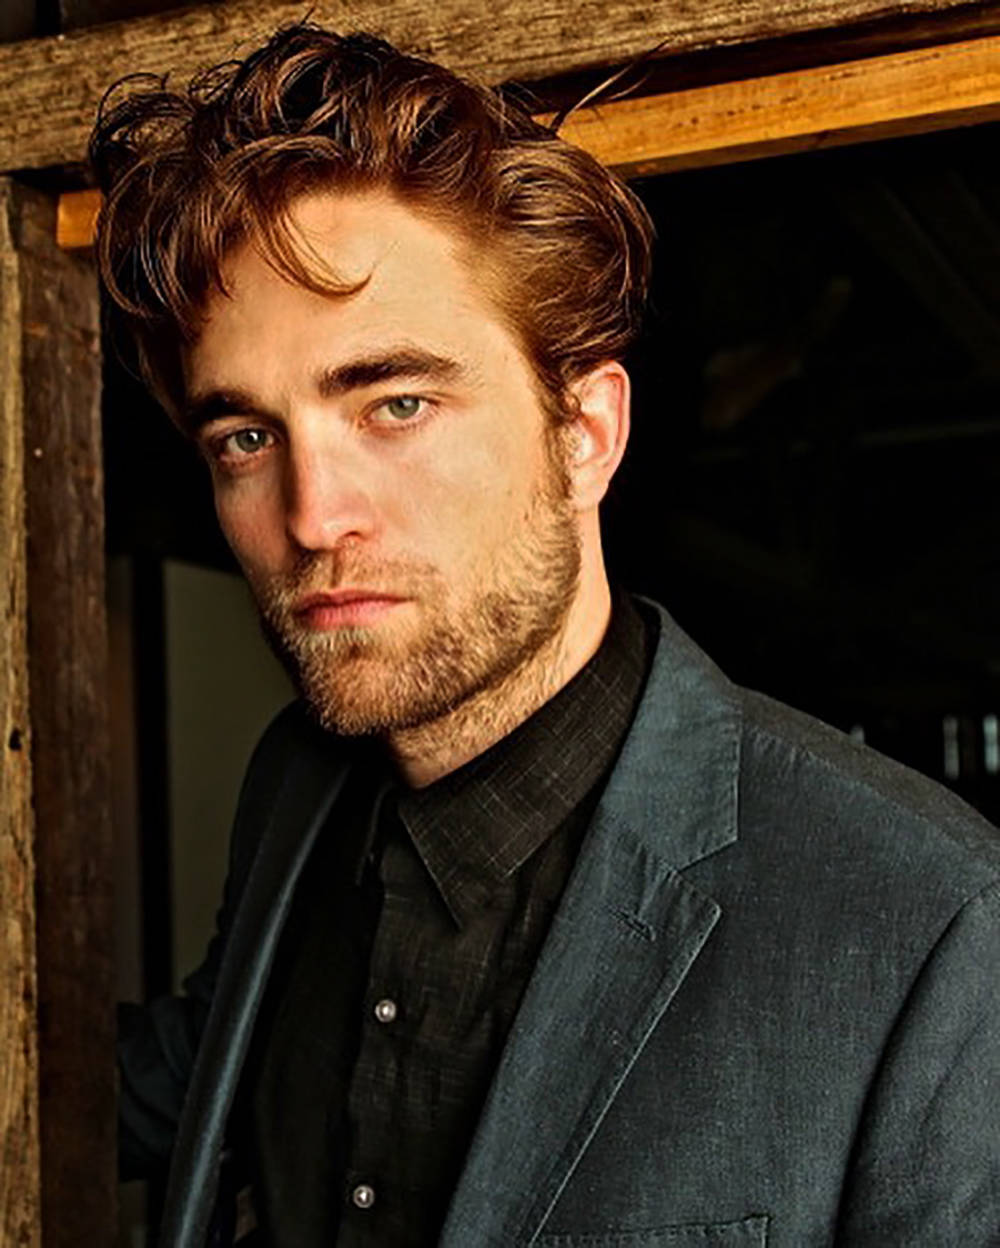 Robert Pattinson - Actor